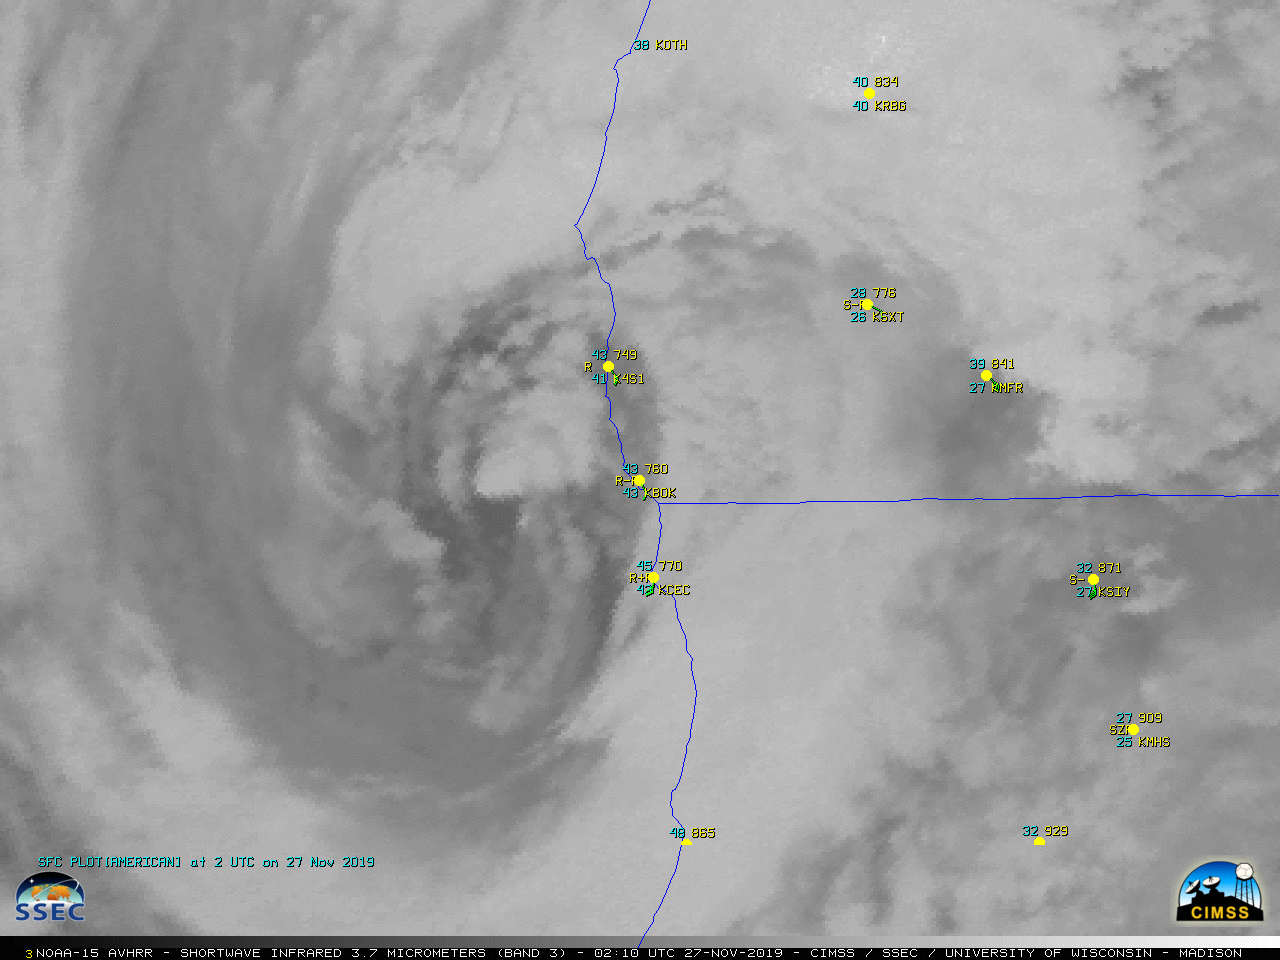 NOAA-15 AVHRR Shortwave Infrared (3.7 µm) image at 0217 UTC [click to enlarge]